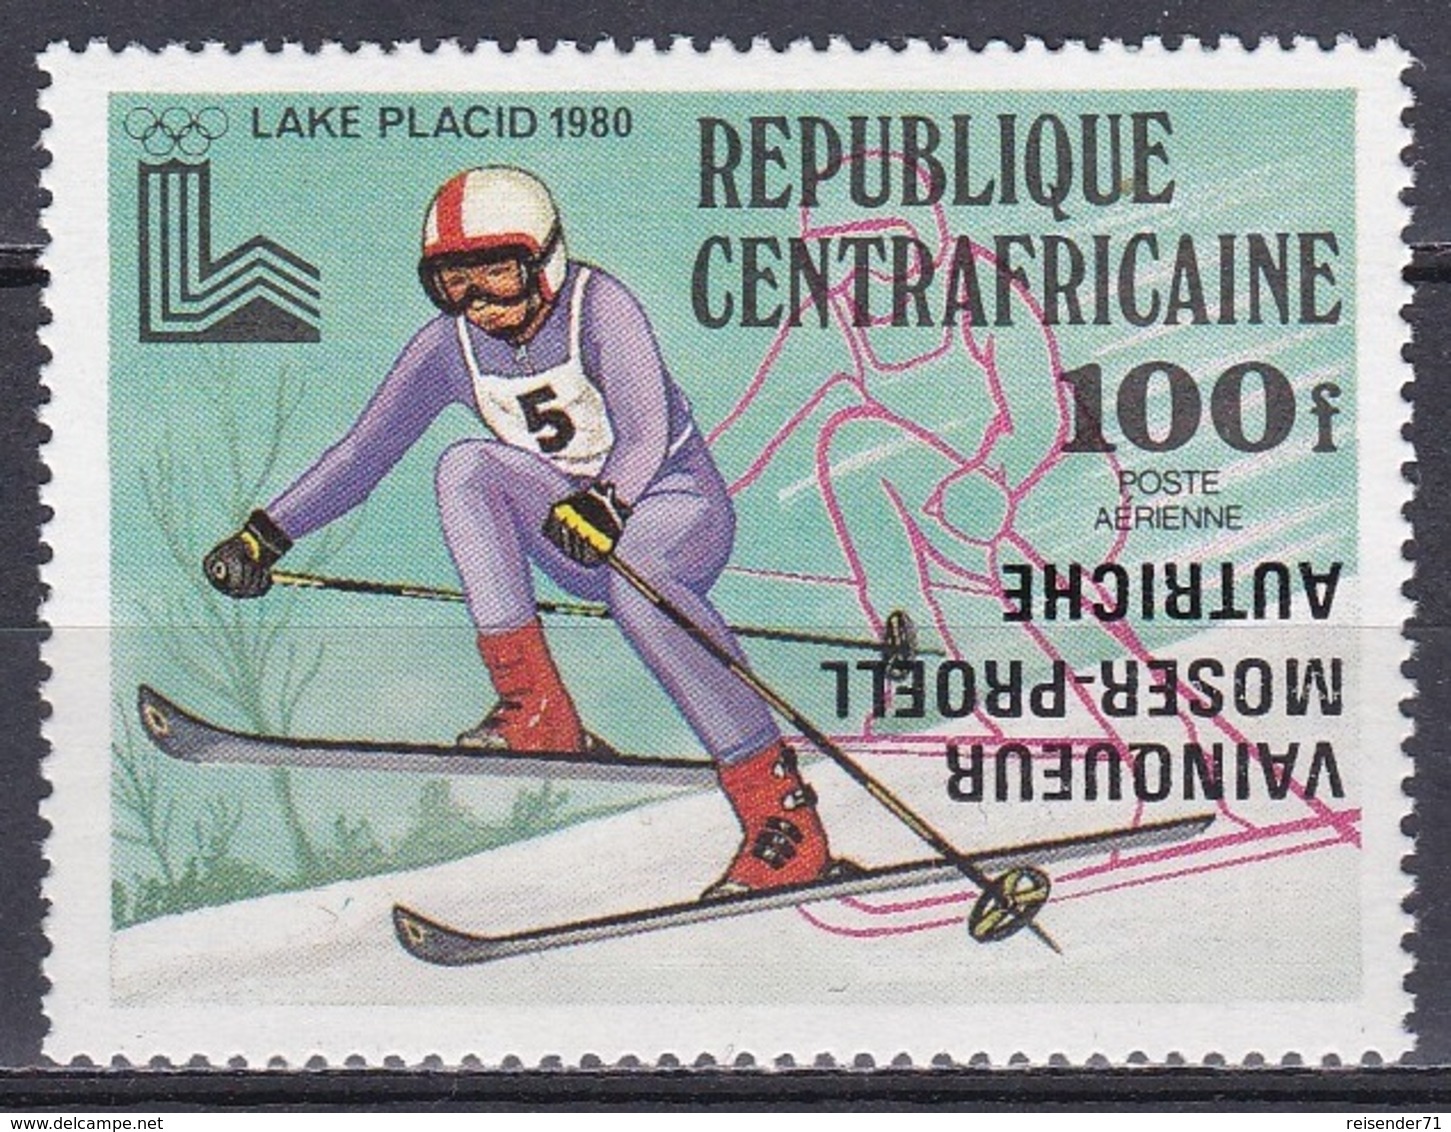 Zentralafrika Central Africa 1980 Sport Spiele Olympia Olympics IOC Lake Placid Schifahren Moser-Pröll, Mi. 673 ** - Zentralafrik. Republik